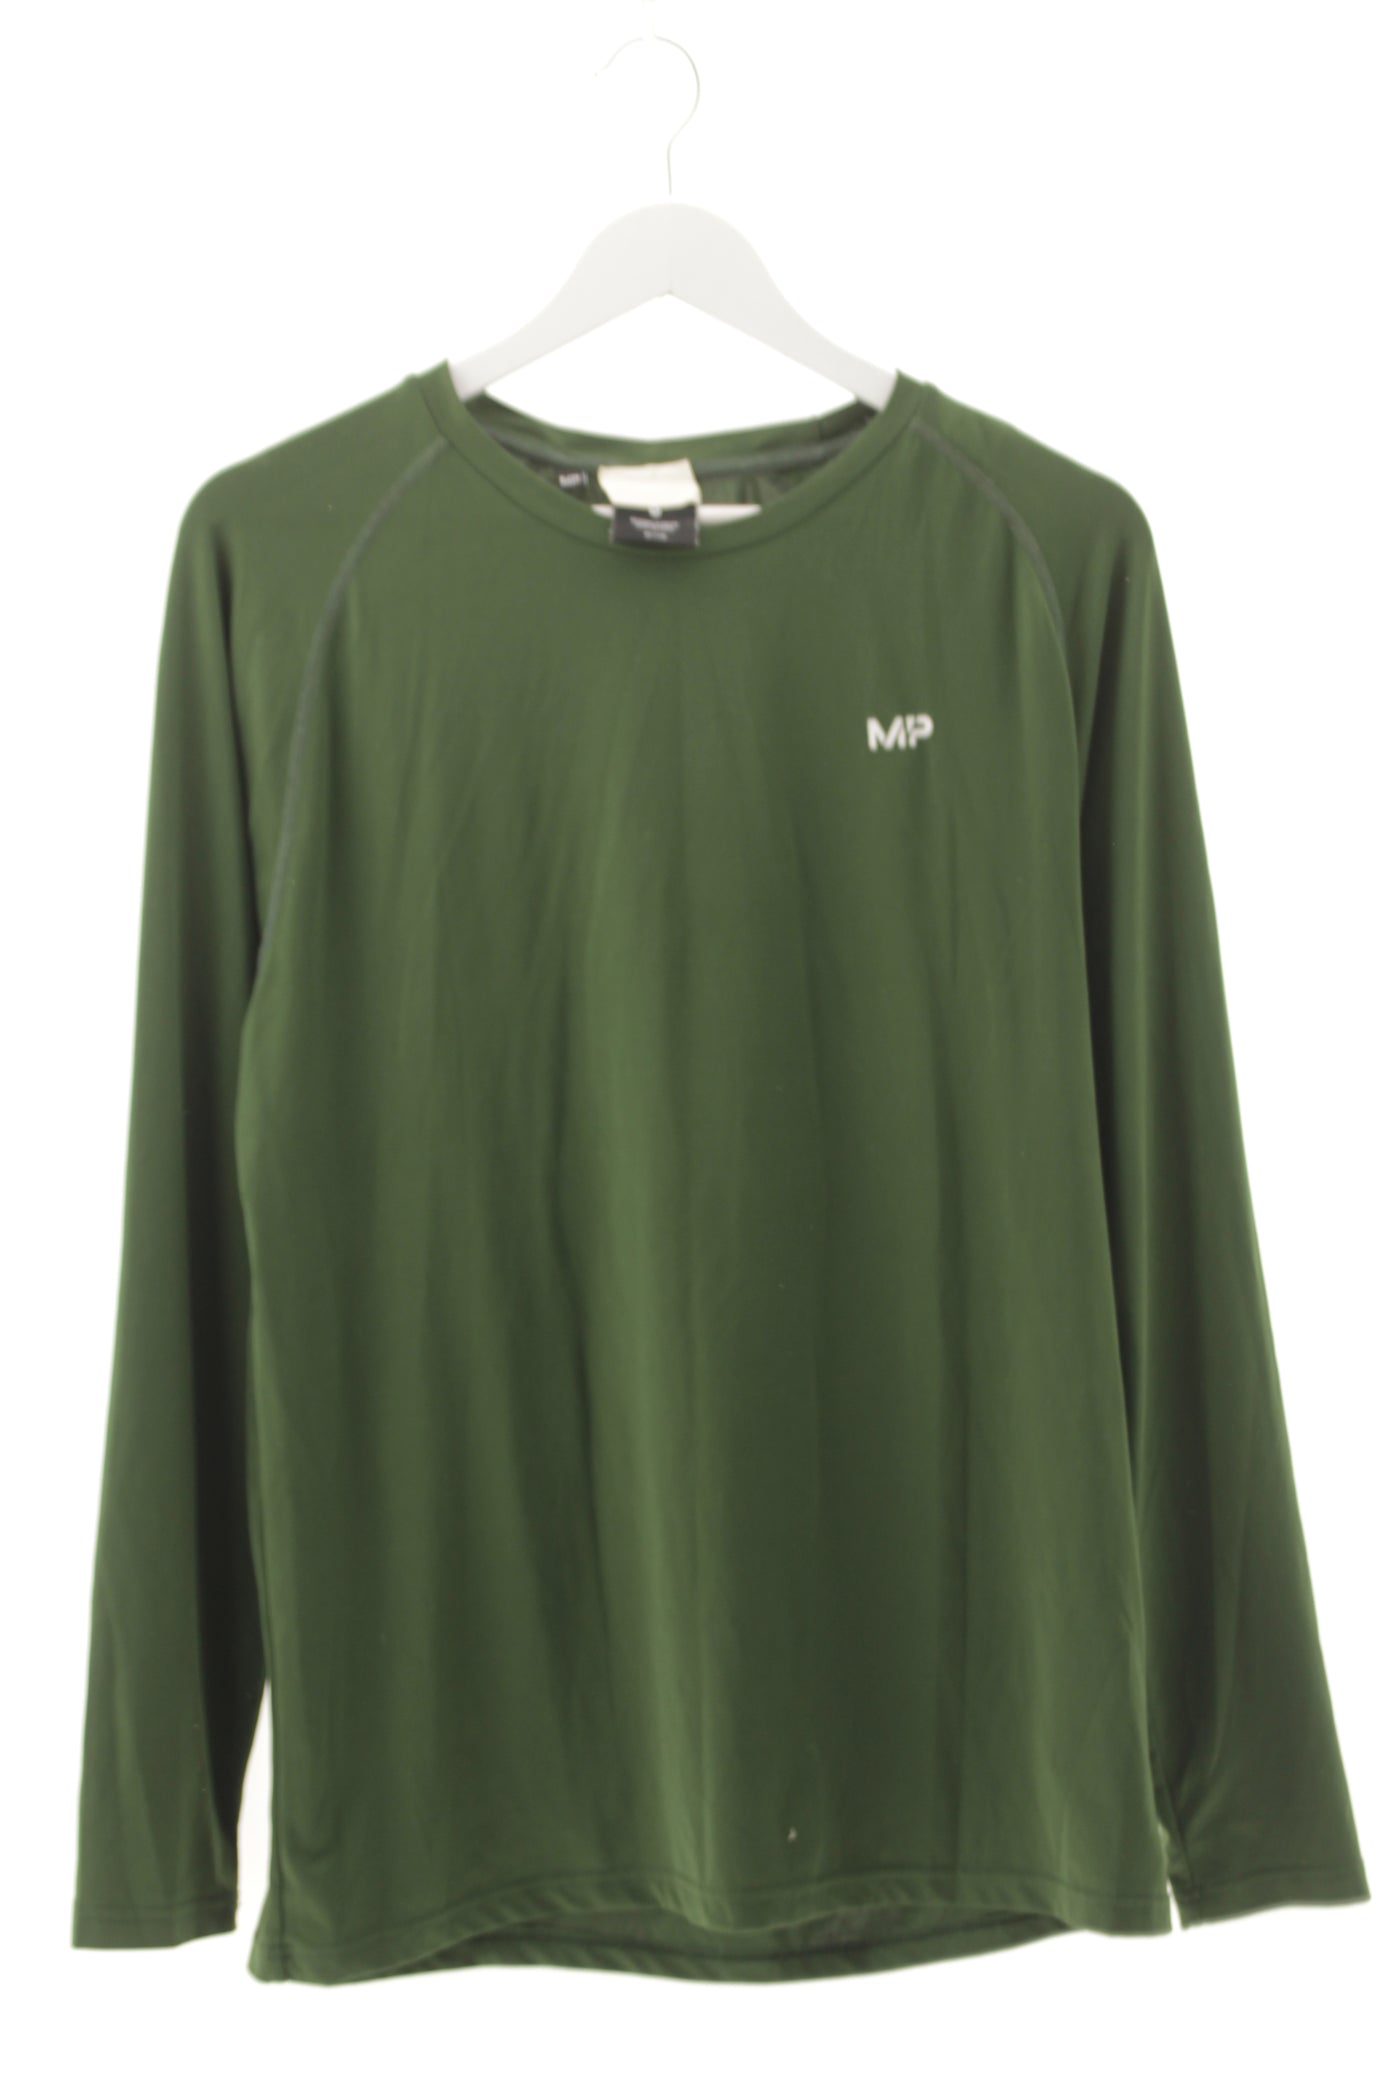 Camiseta verde manga larga MP